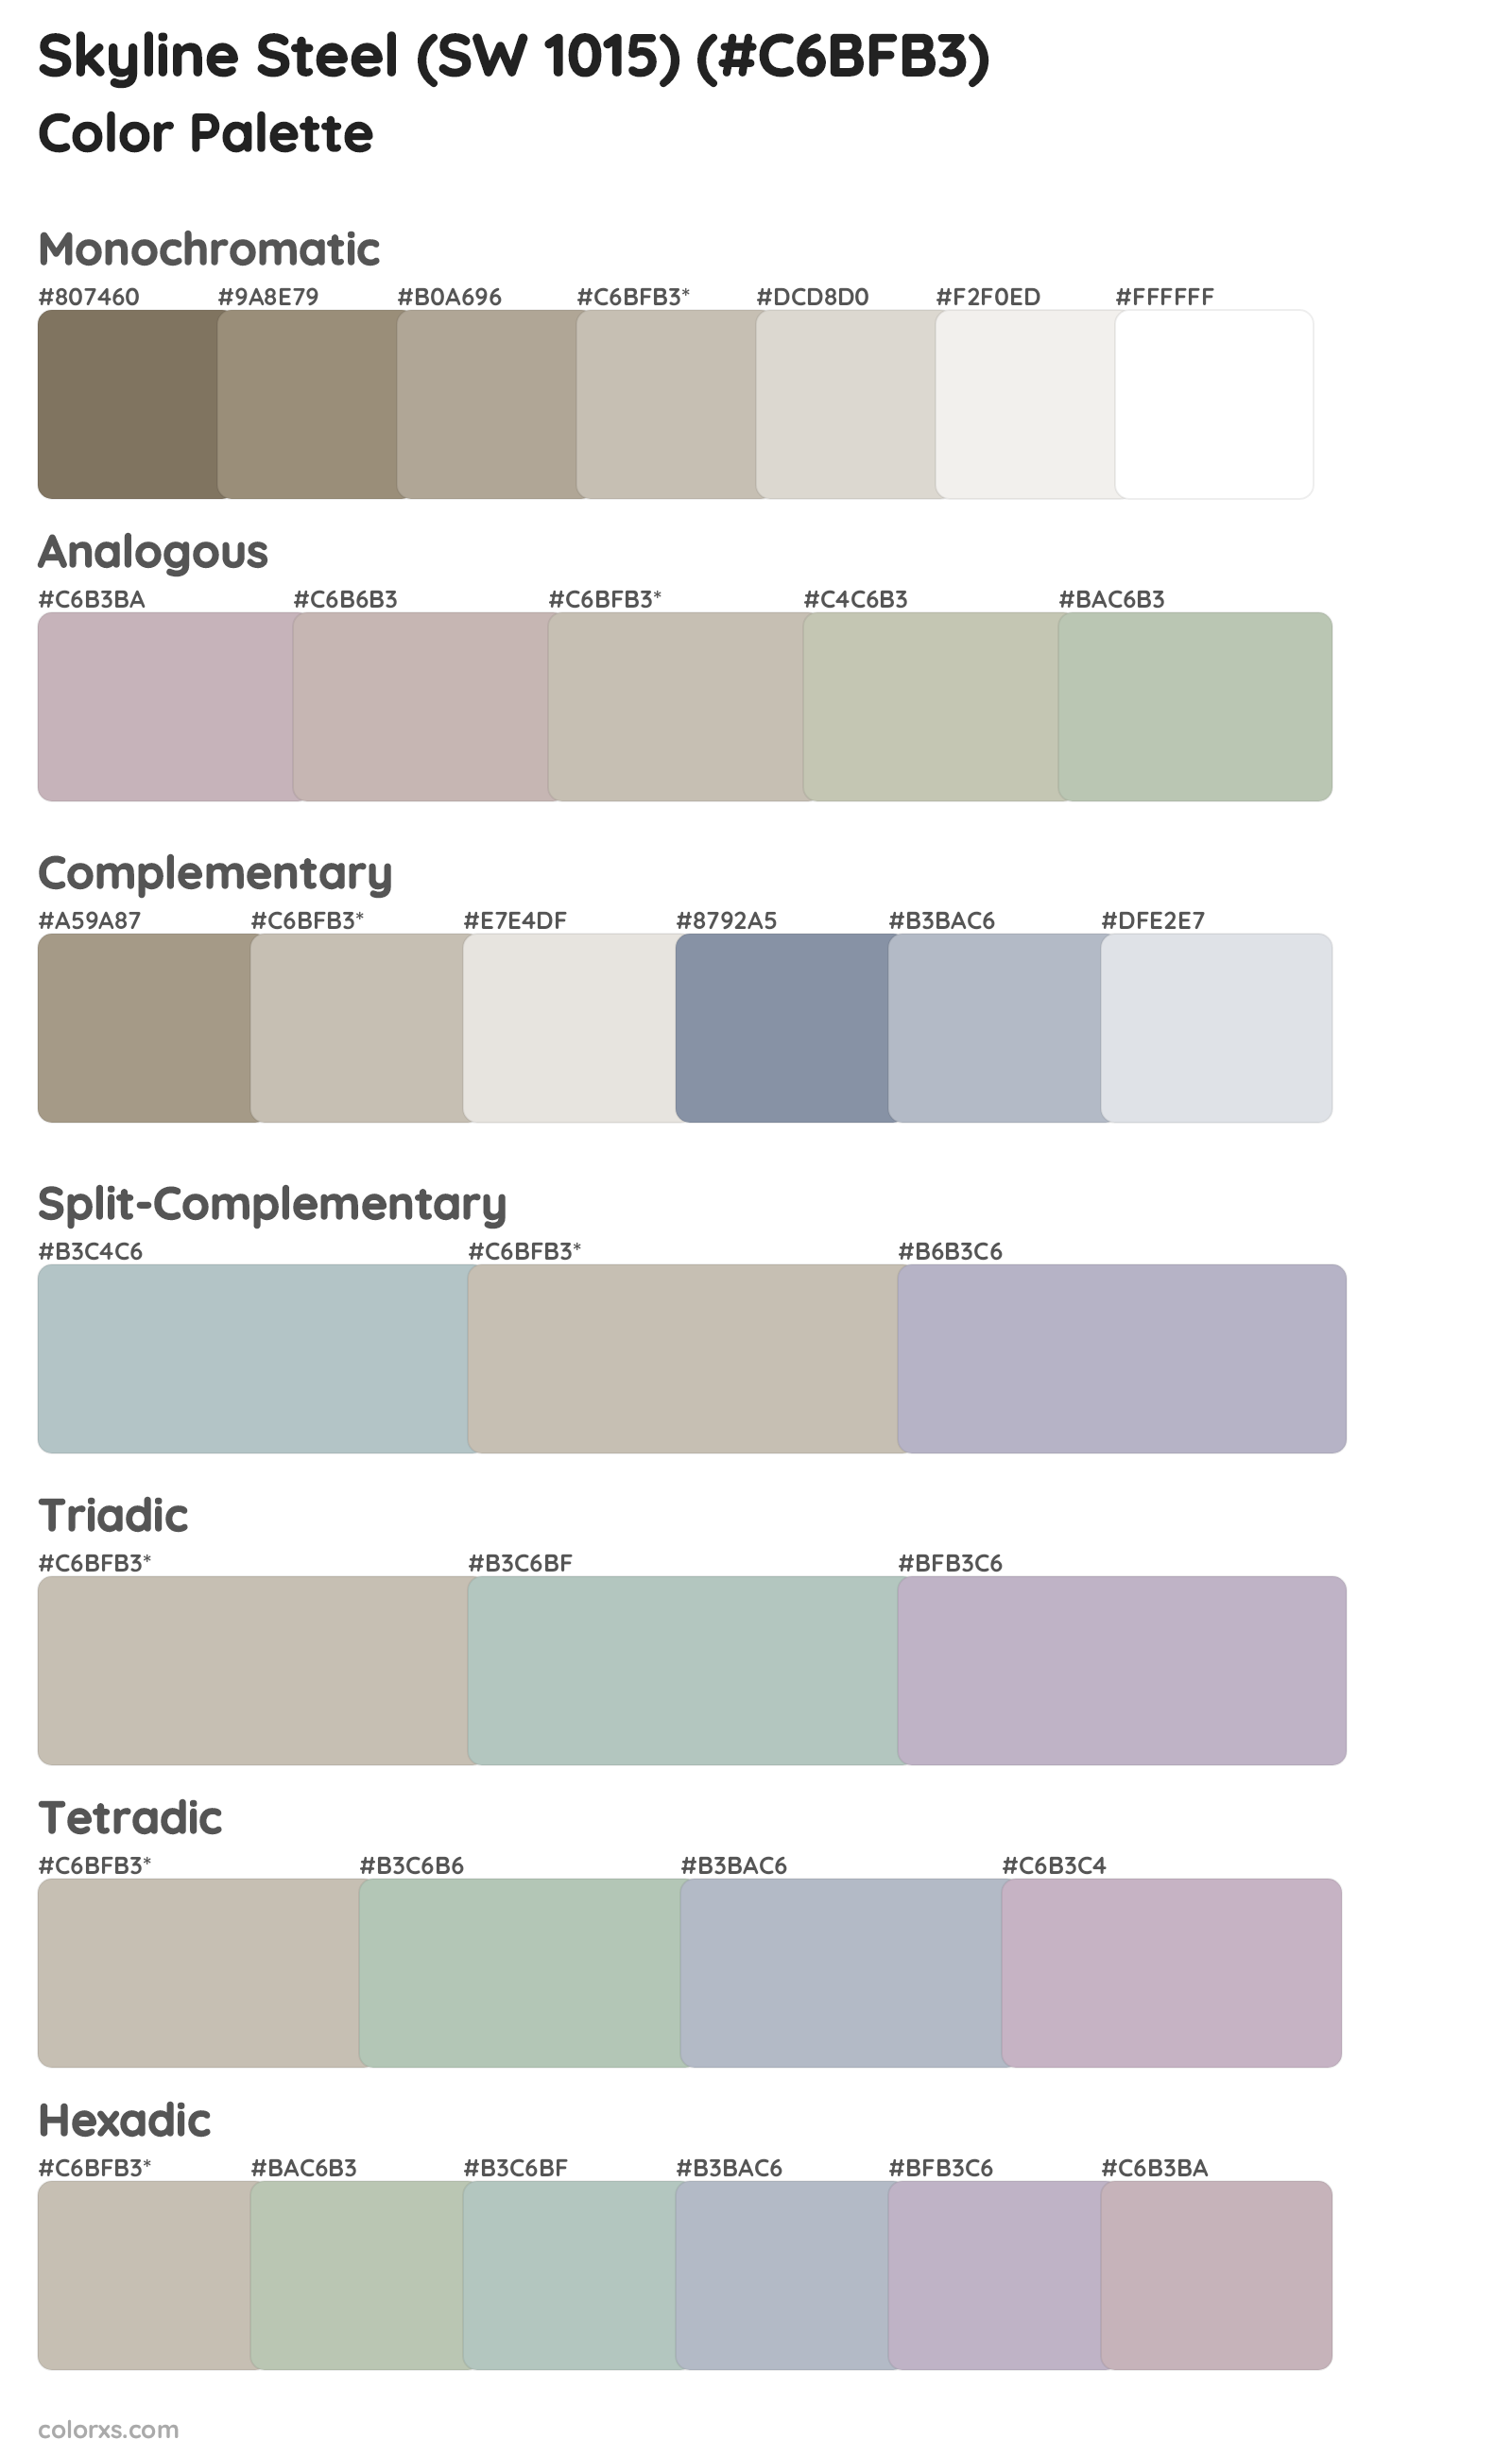 Skyline Steel (SW 1015) Color Scheme Palettes